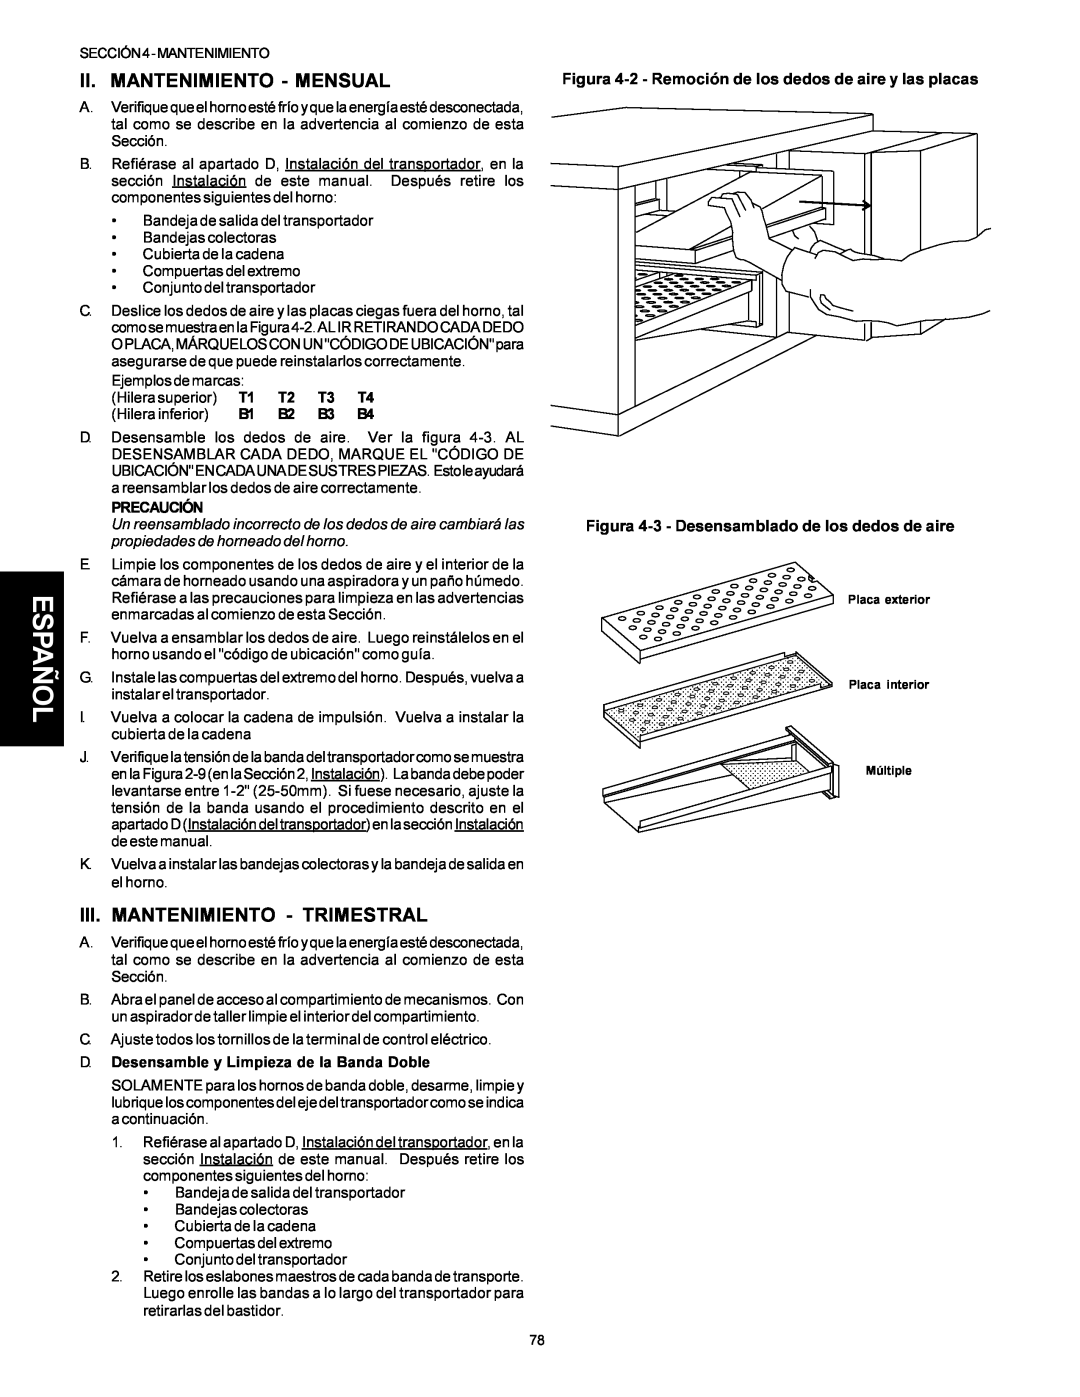 Middleby Marshall Model PS536 installation manual Español, Ii. Mantenimiento - Mensual, Iii. Mantenimiento - Trimestral 